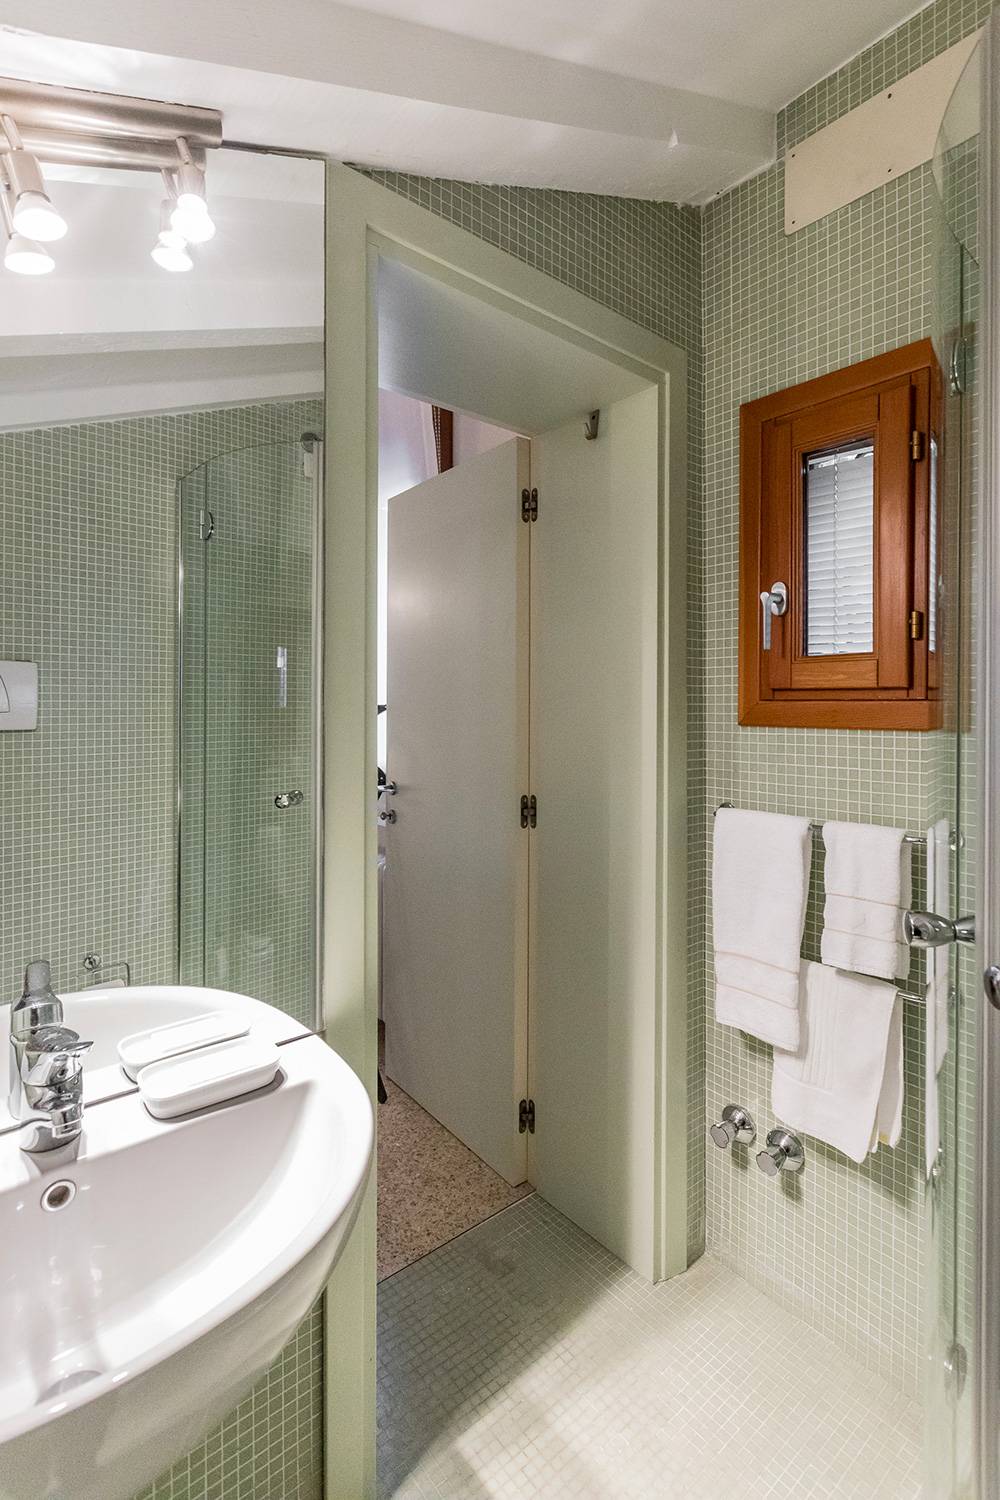 the en-suite bathroom has a shower box